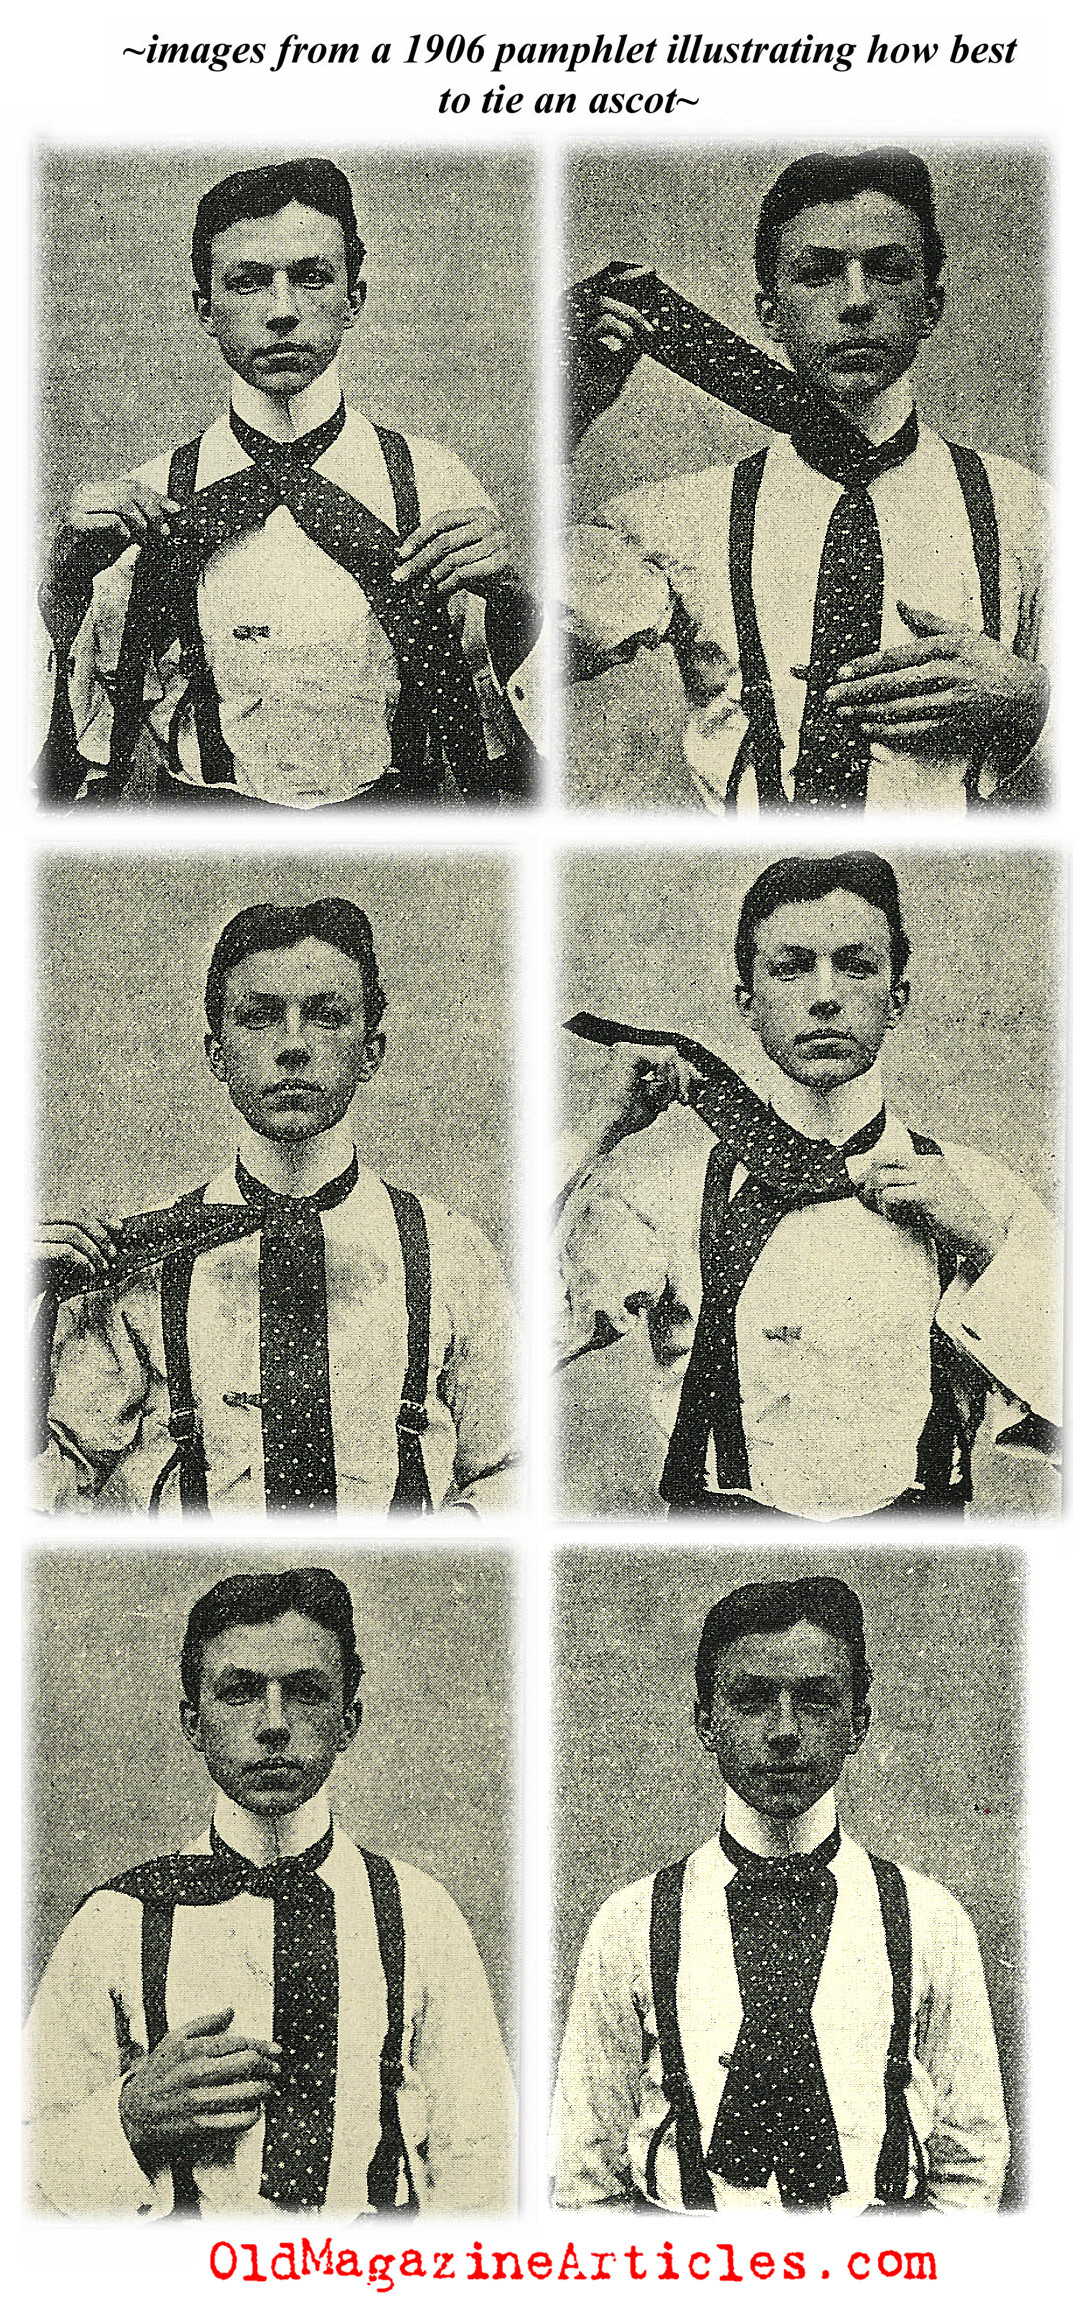 The Ascot (A  Fashion Manual, 1906)